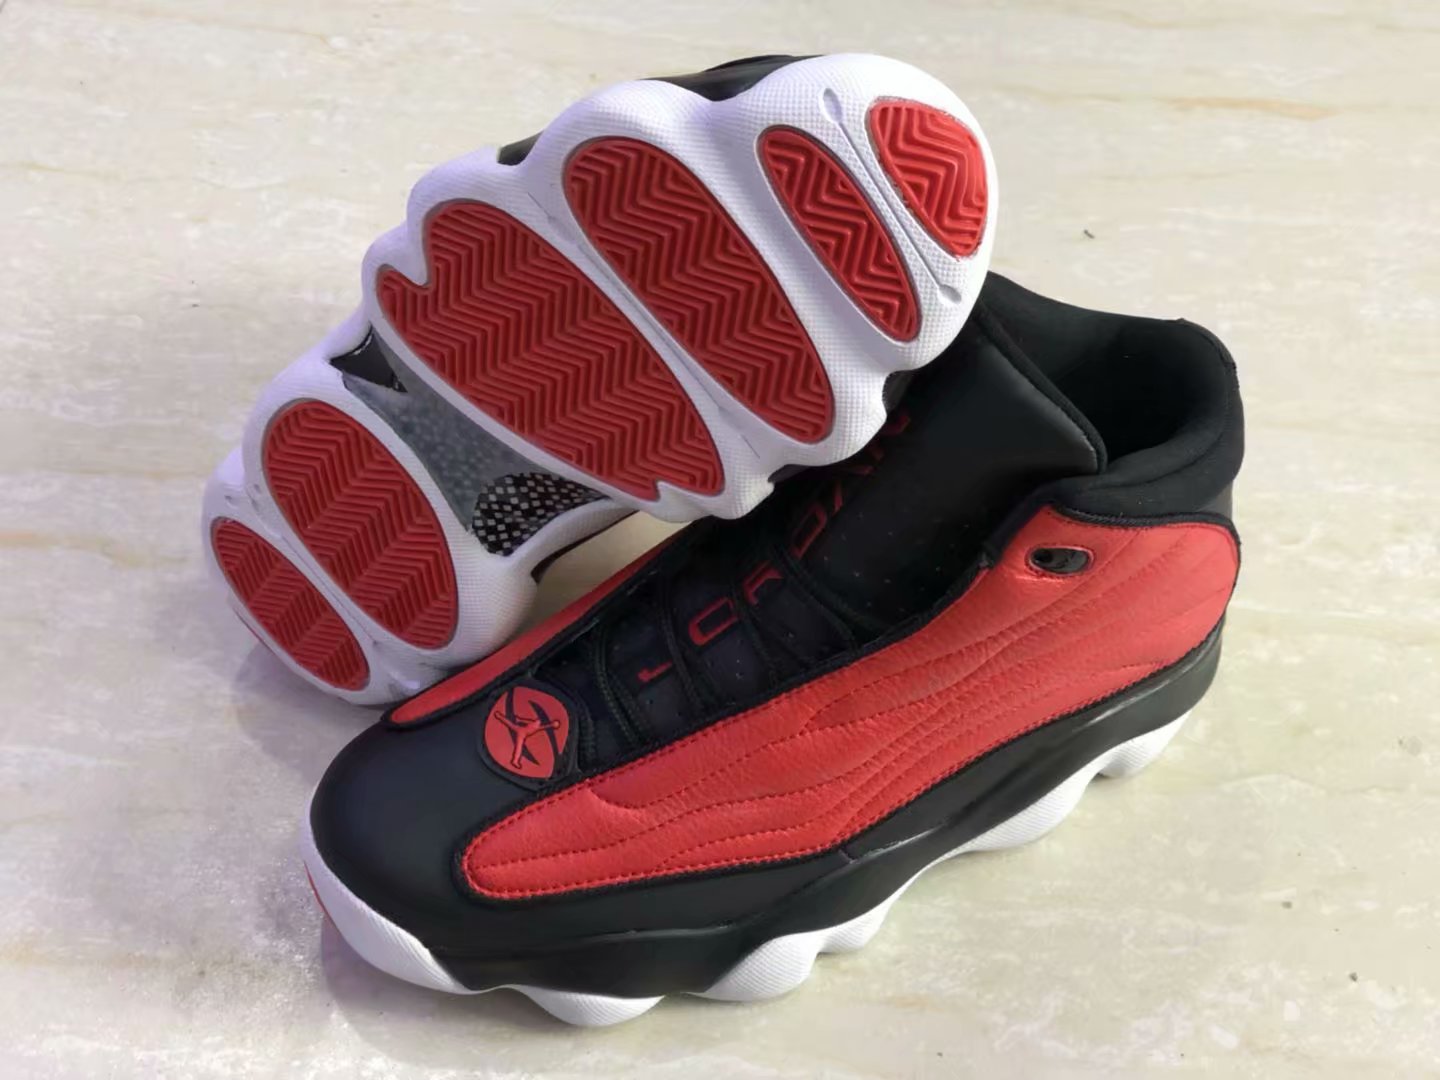 New Air Jordan 13.5 Red Black Shoes - Click Image to Close